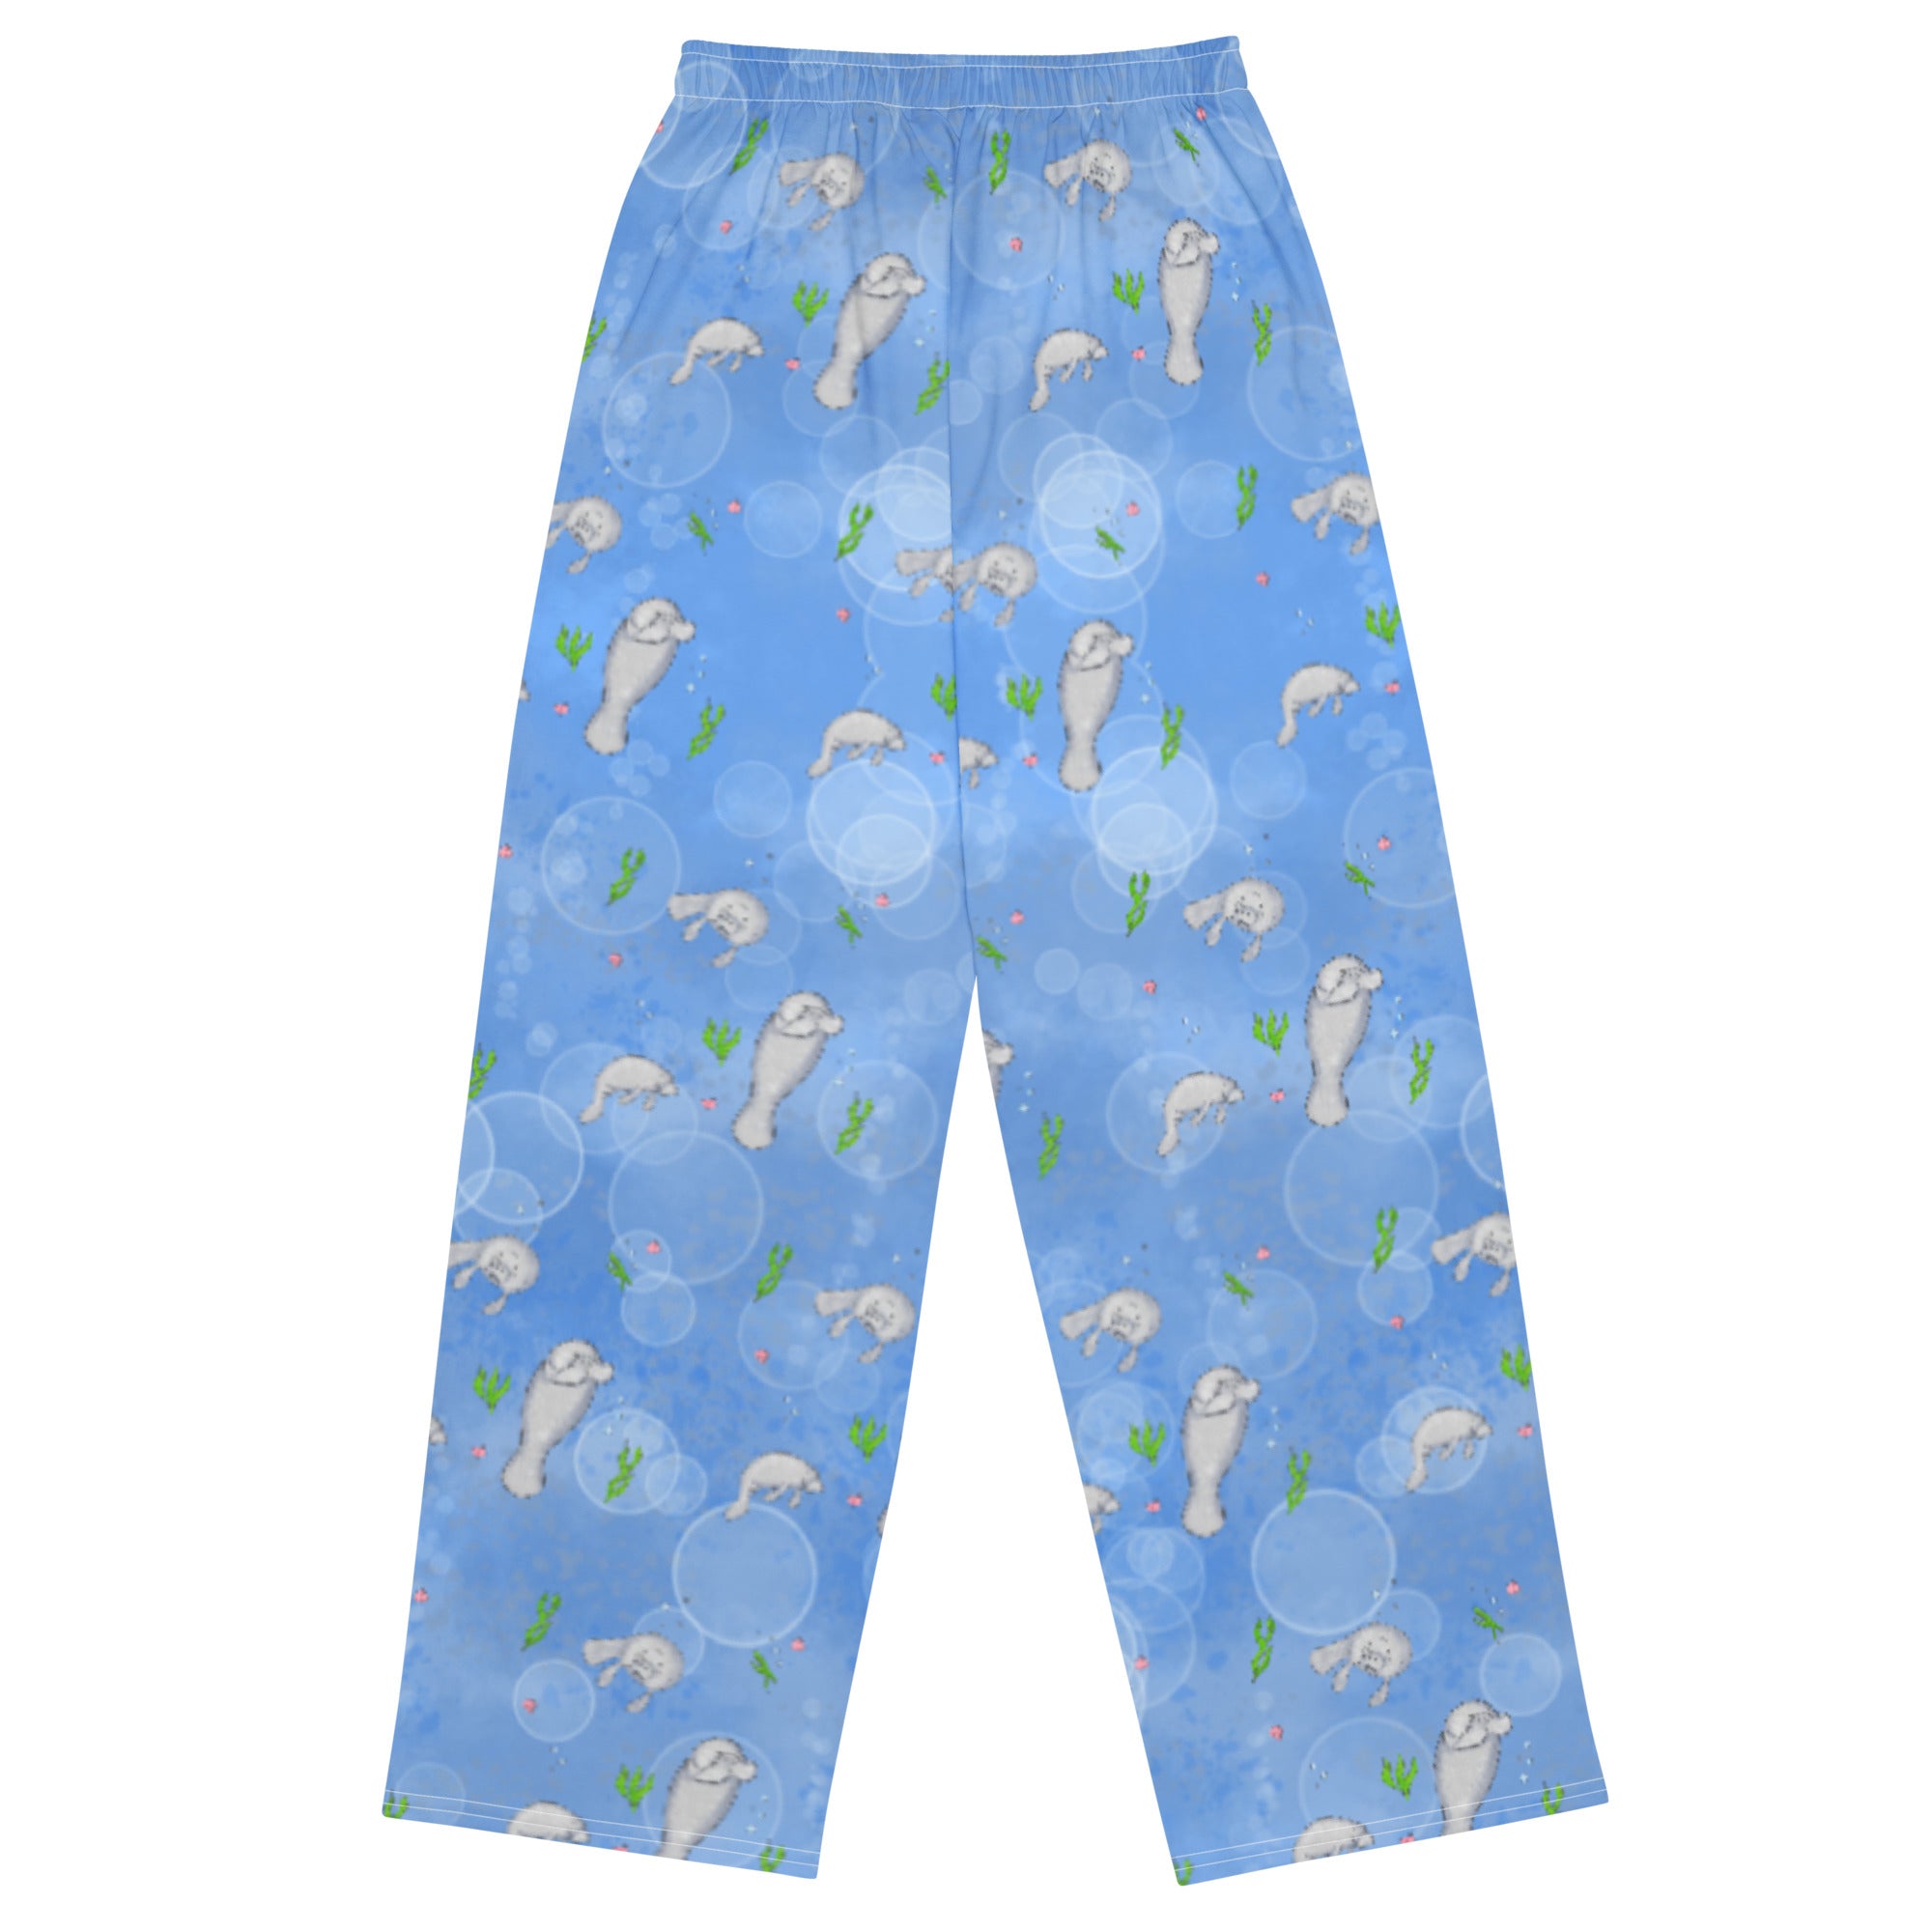 Daphne Newman x Ceci New York Aeryn Silk Pajama Pants – Daphne Newman Design